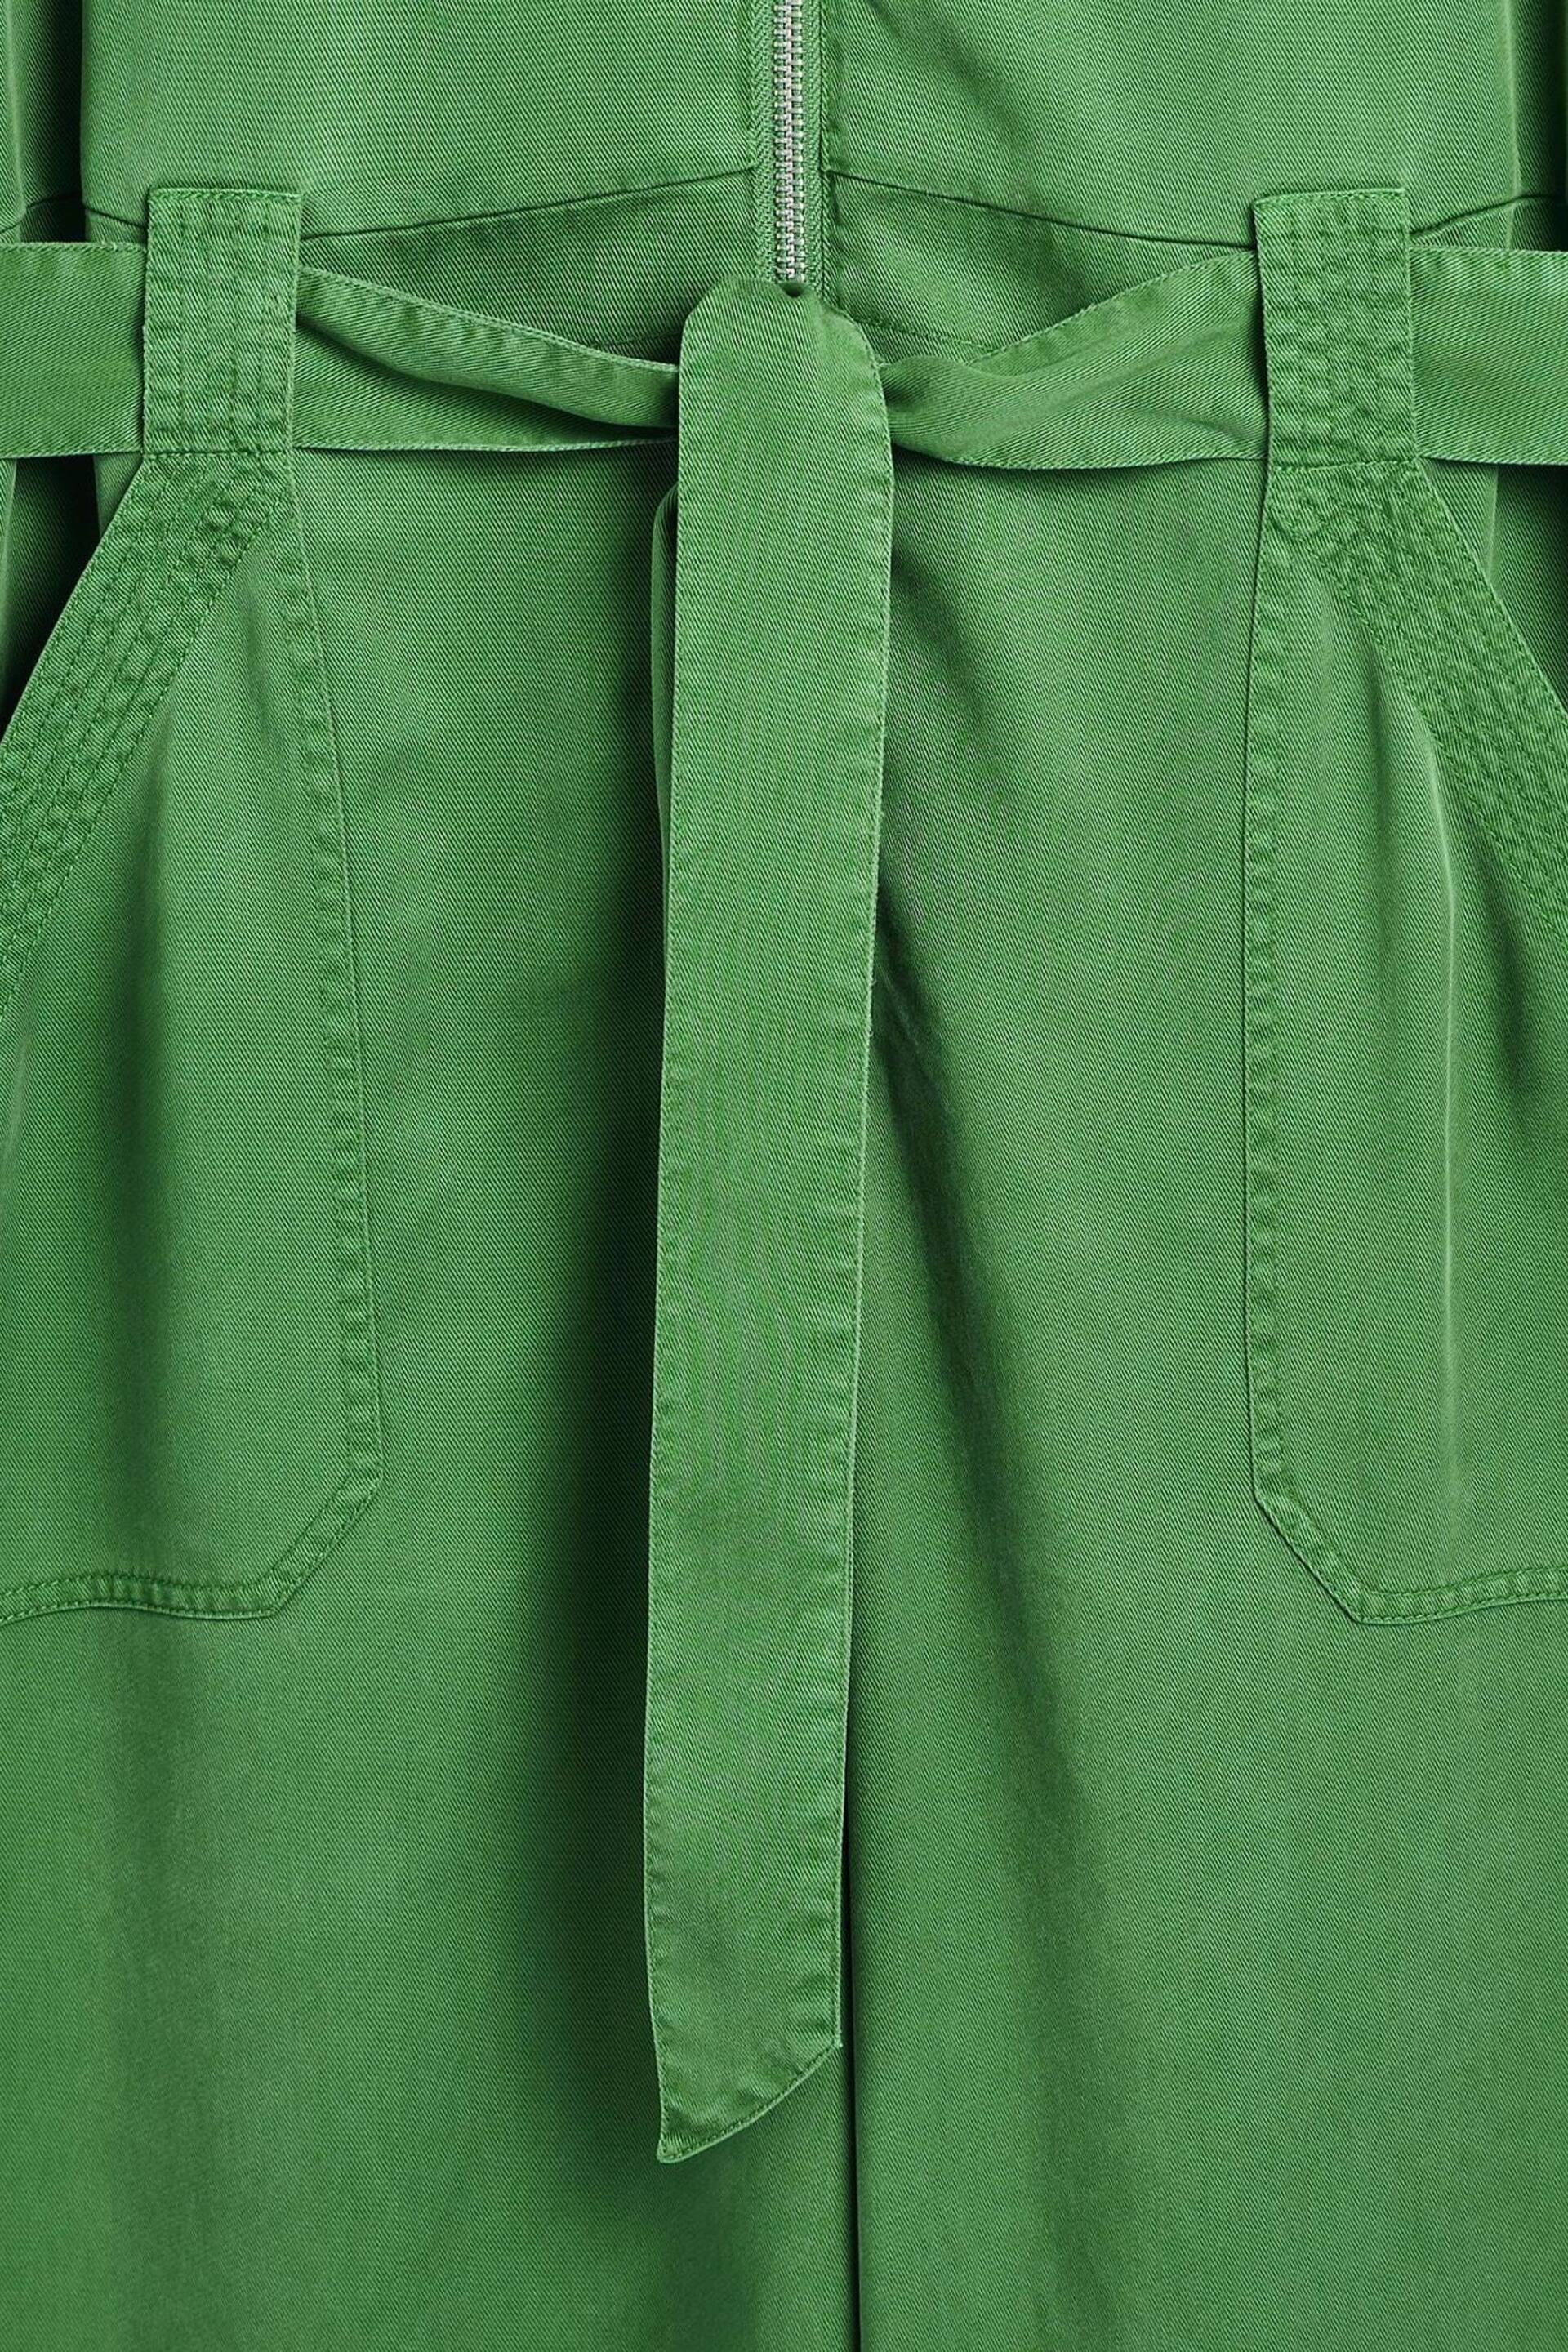 Oliver Bonas Green Zip Up Short Sleeve Jumpsuit - Image 6 of 8